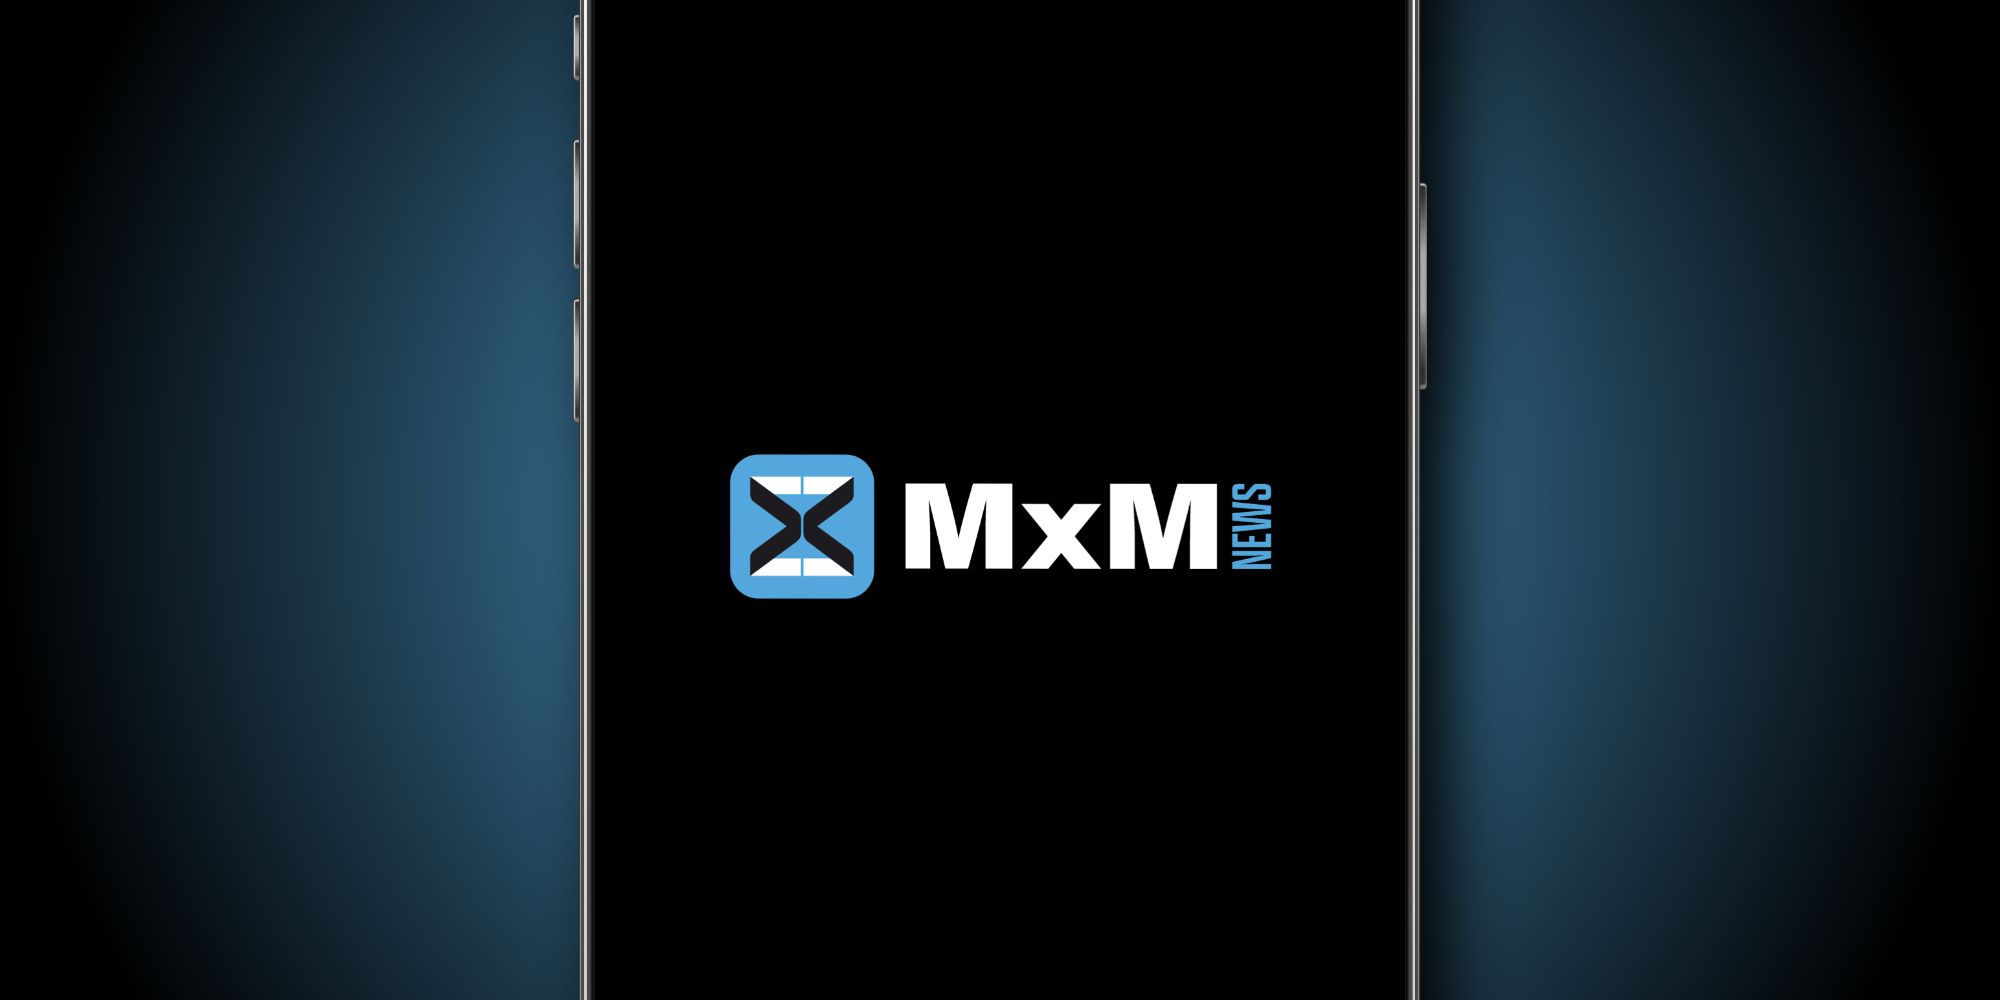 The MxM News app